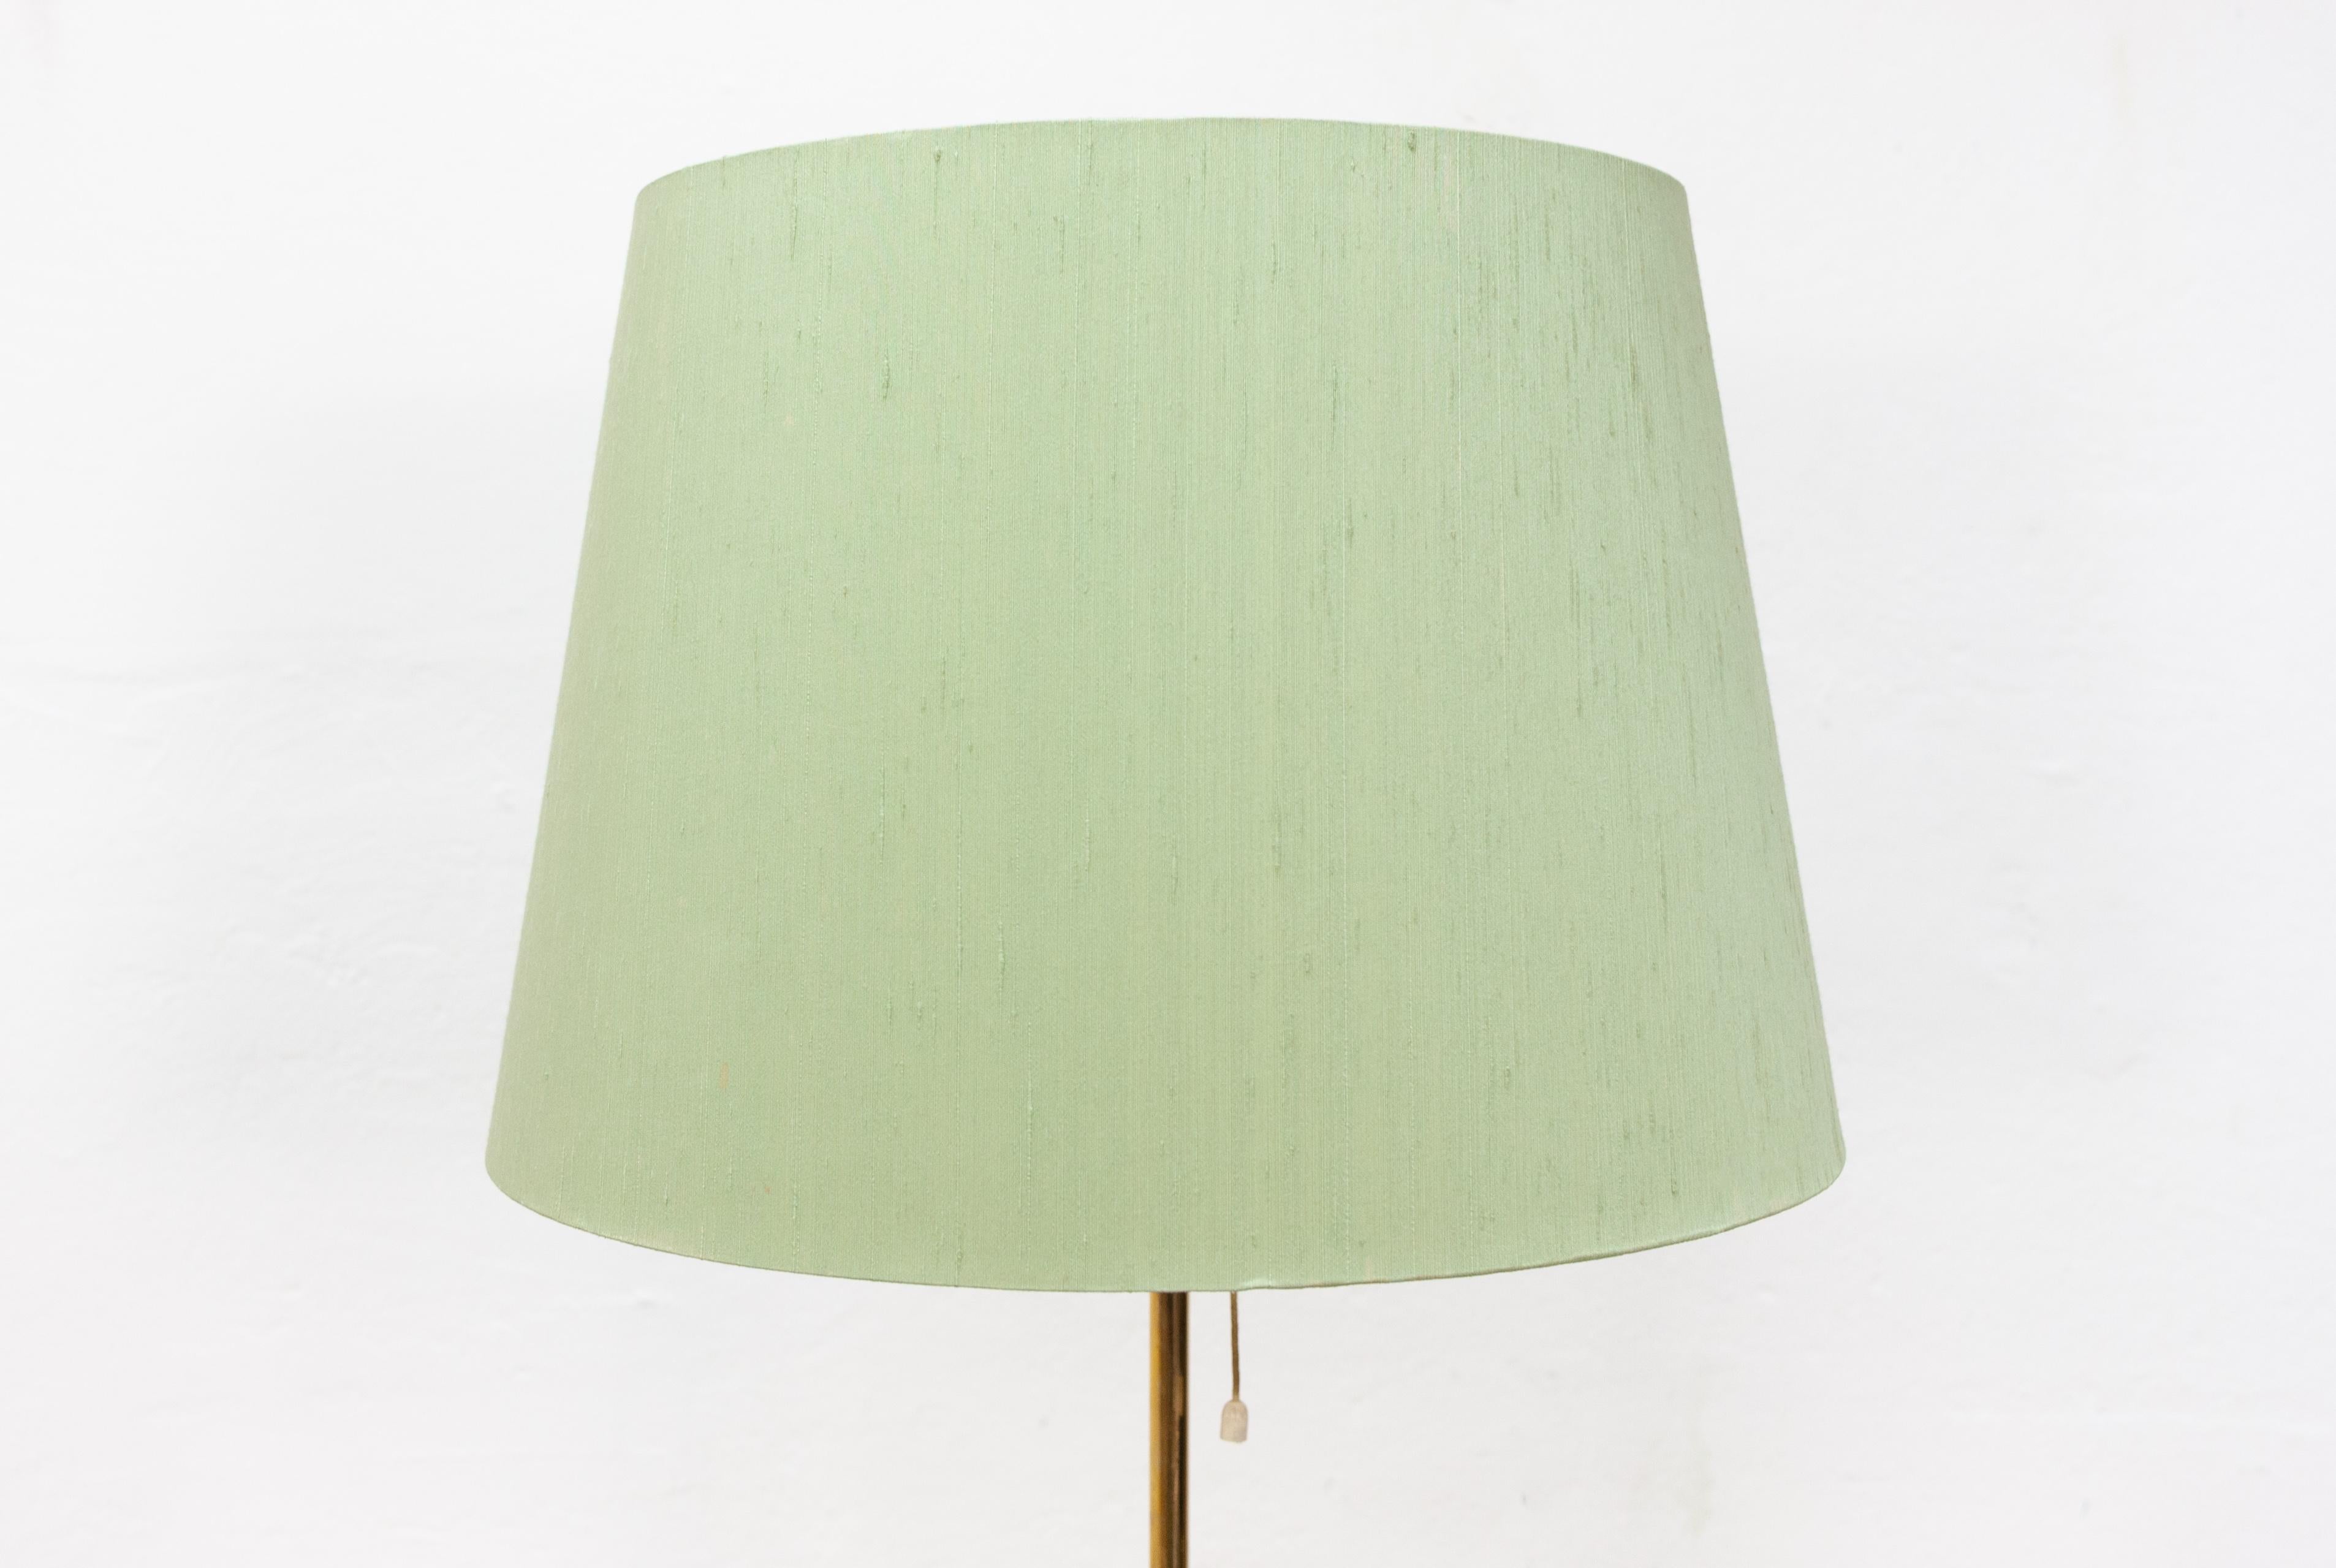 Bergbom B-024 Table Lamp with Green Shade, 1960s 1